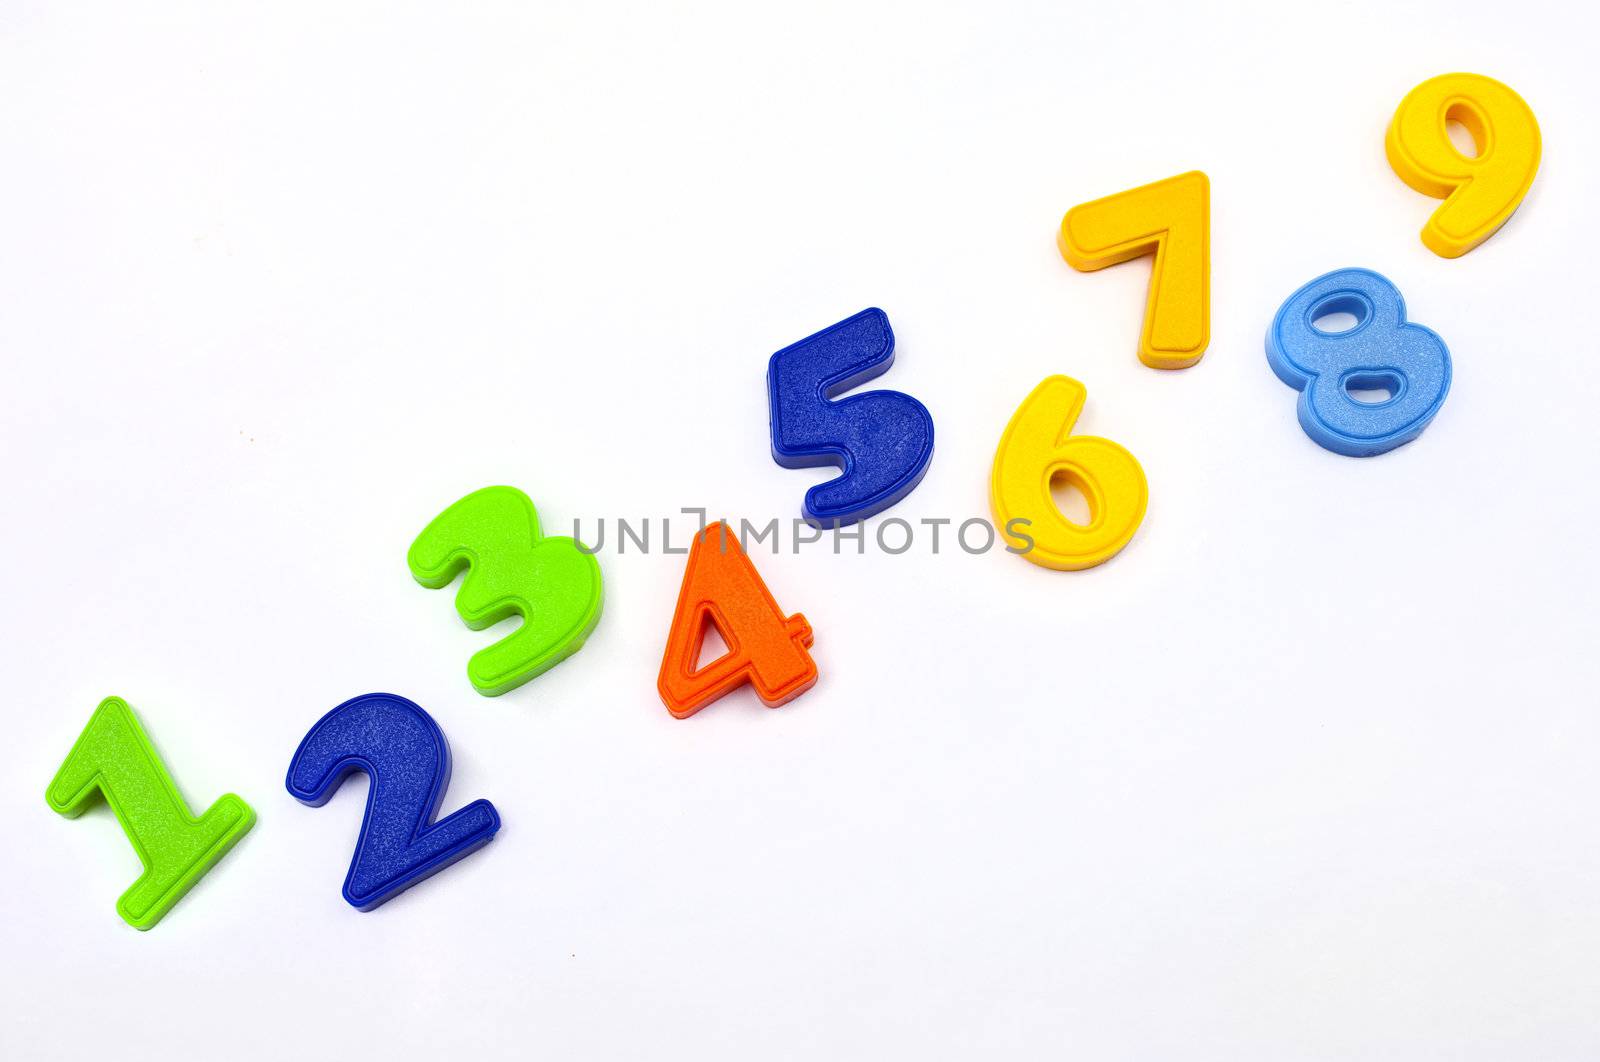 1,2,3,4,5,6,7,8,9 Numbers by chrisdorney